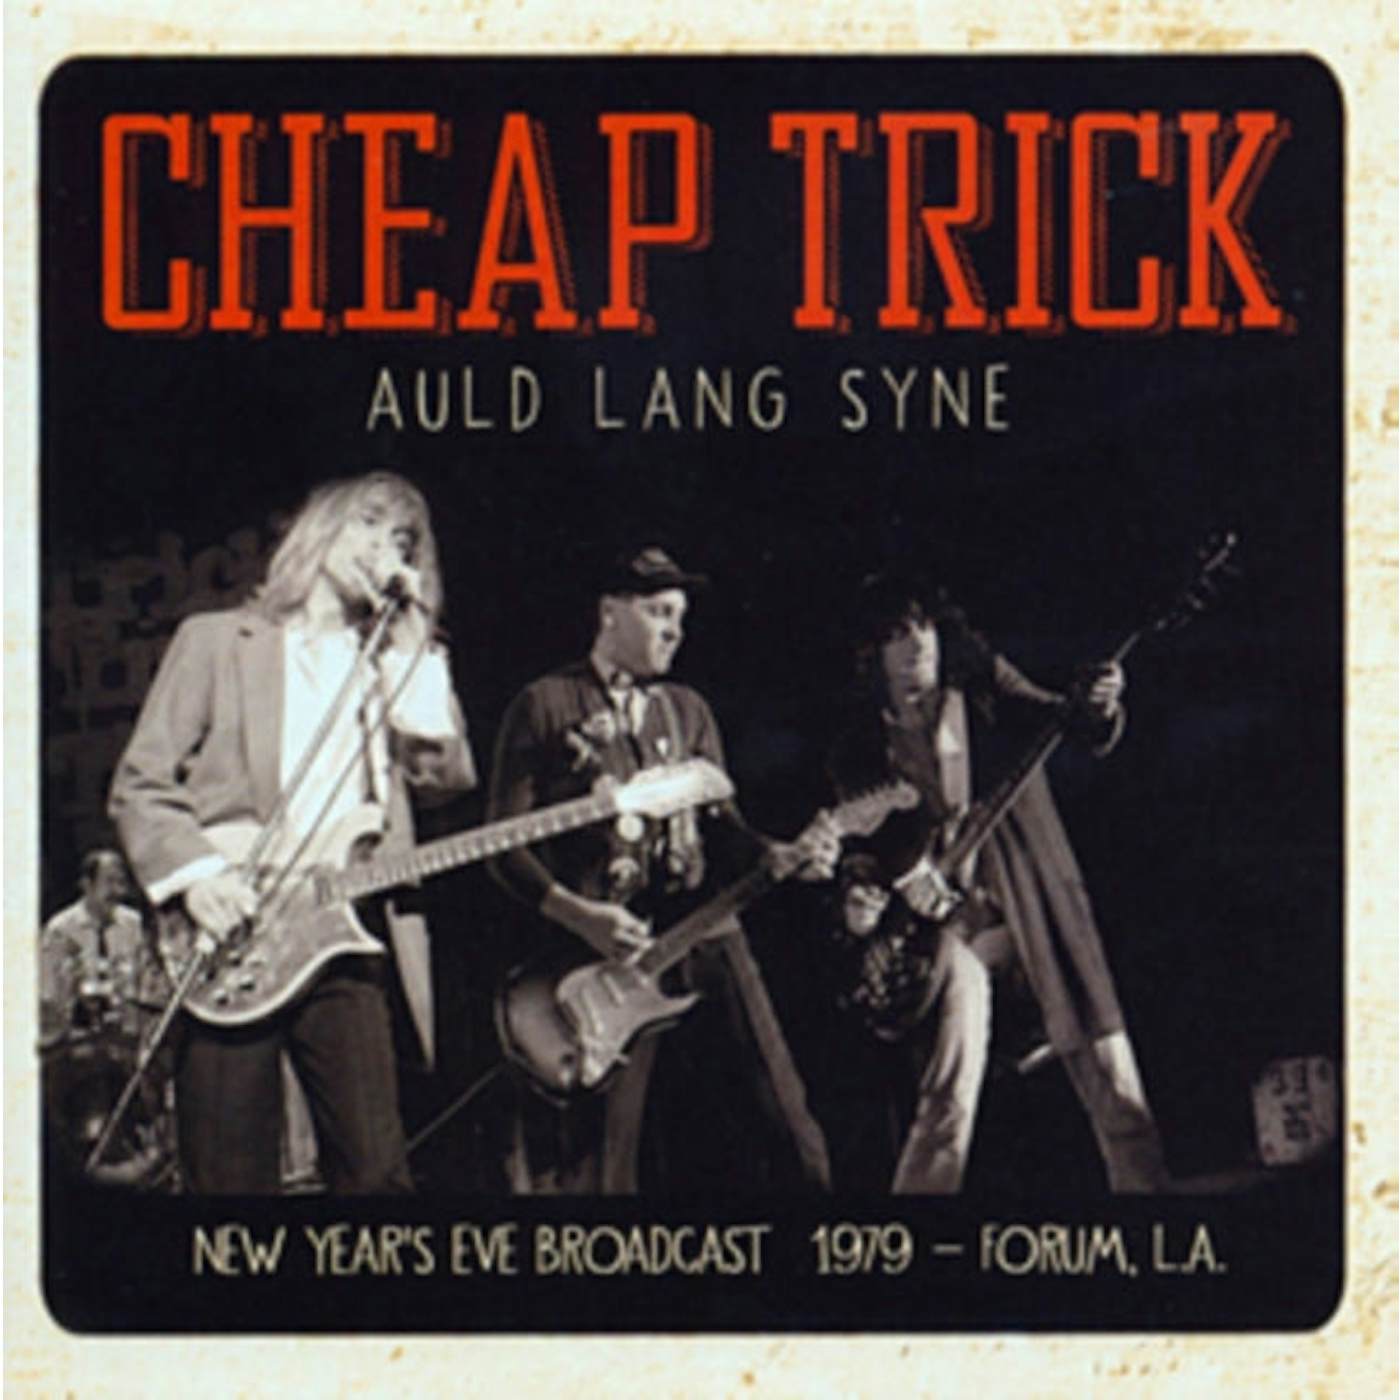 Cheap Trick CD - Auld Lang Syne